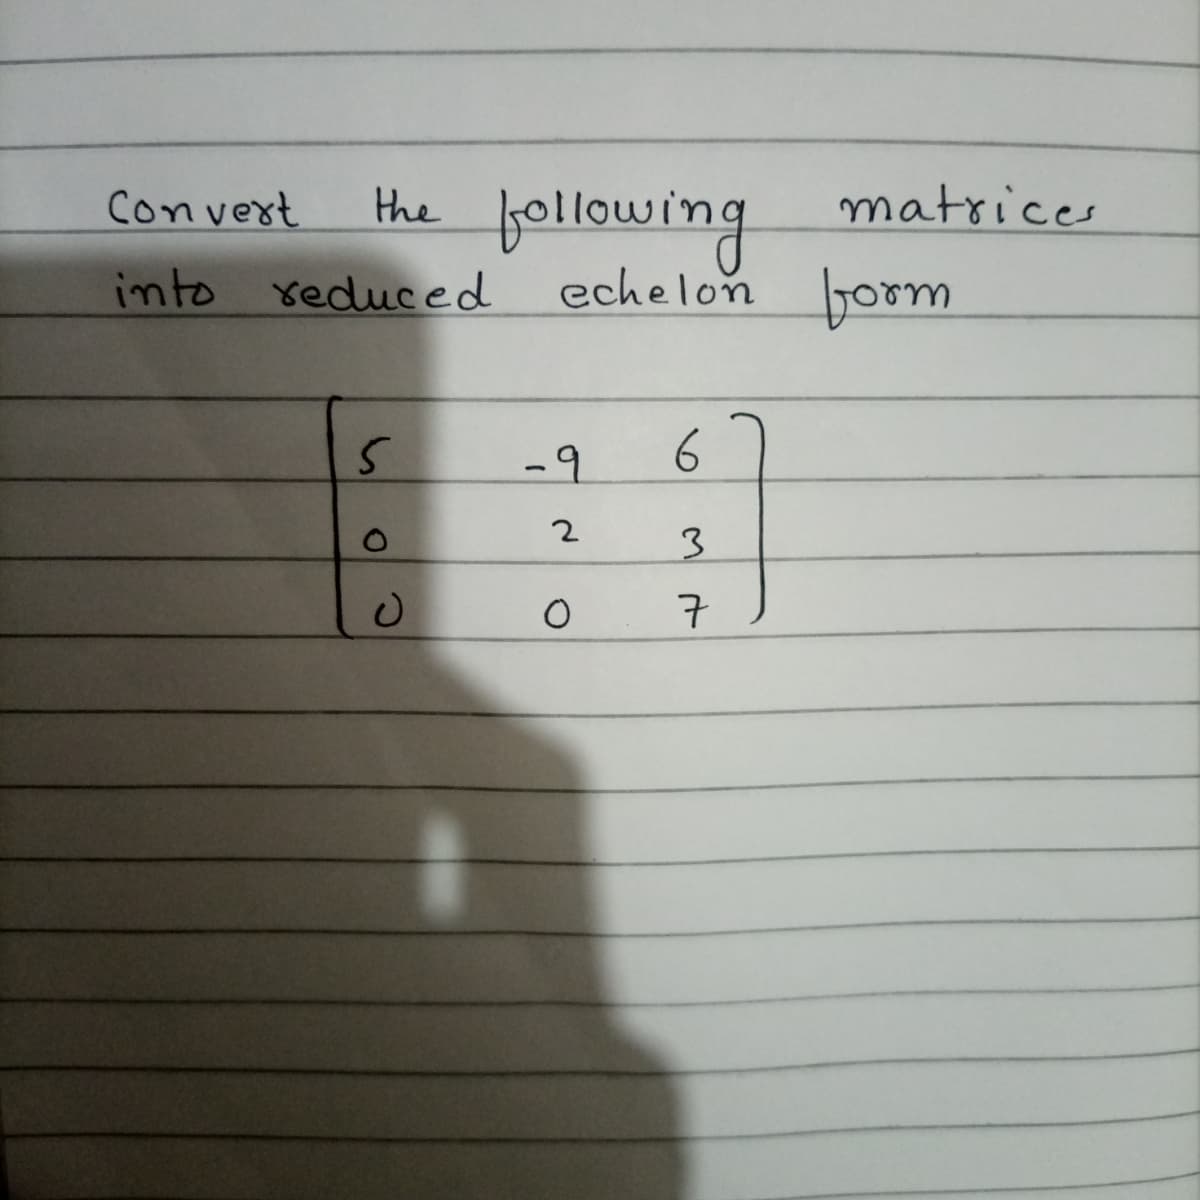 following
echelon jorm
Convert
the
matrices
into reduced
-9
6
2
7
